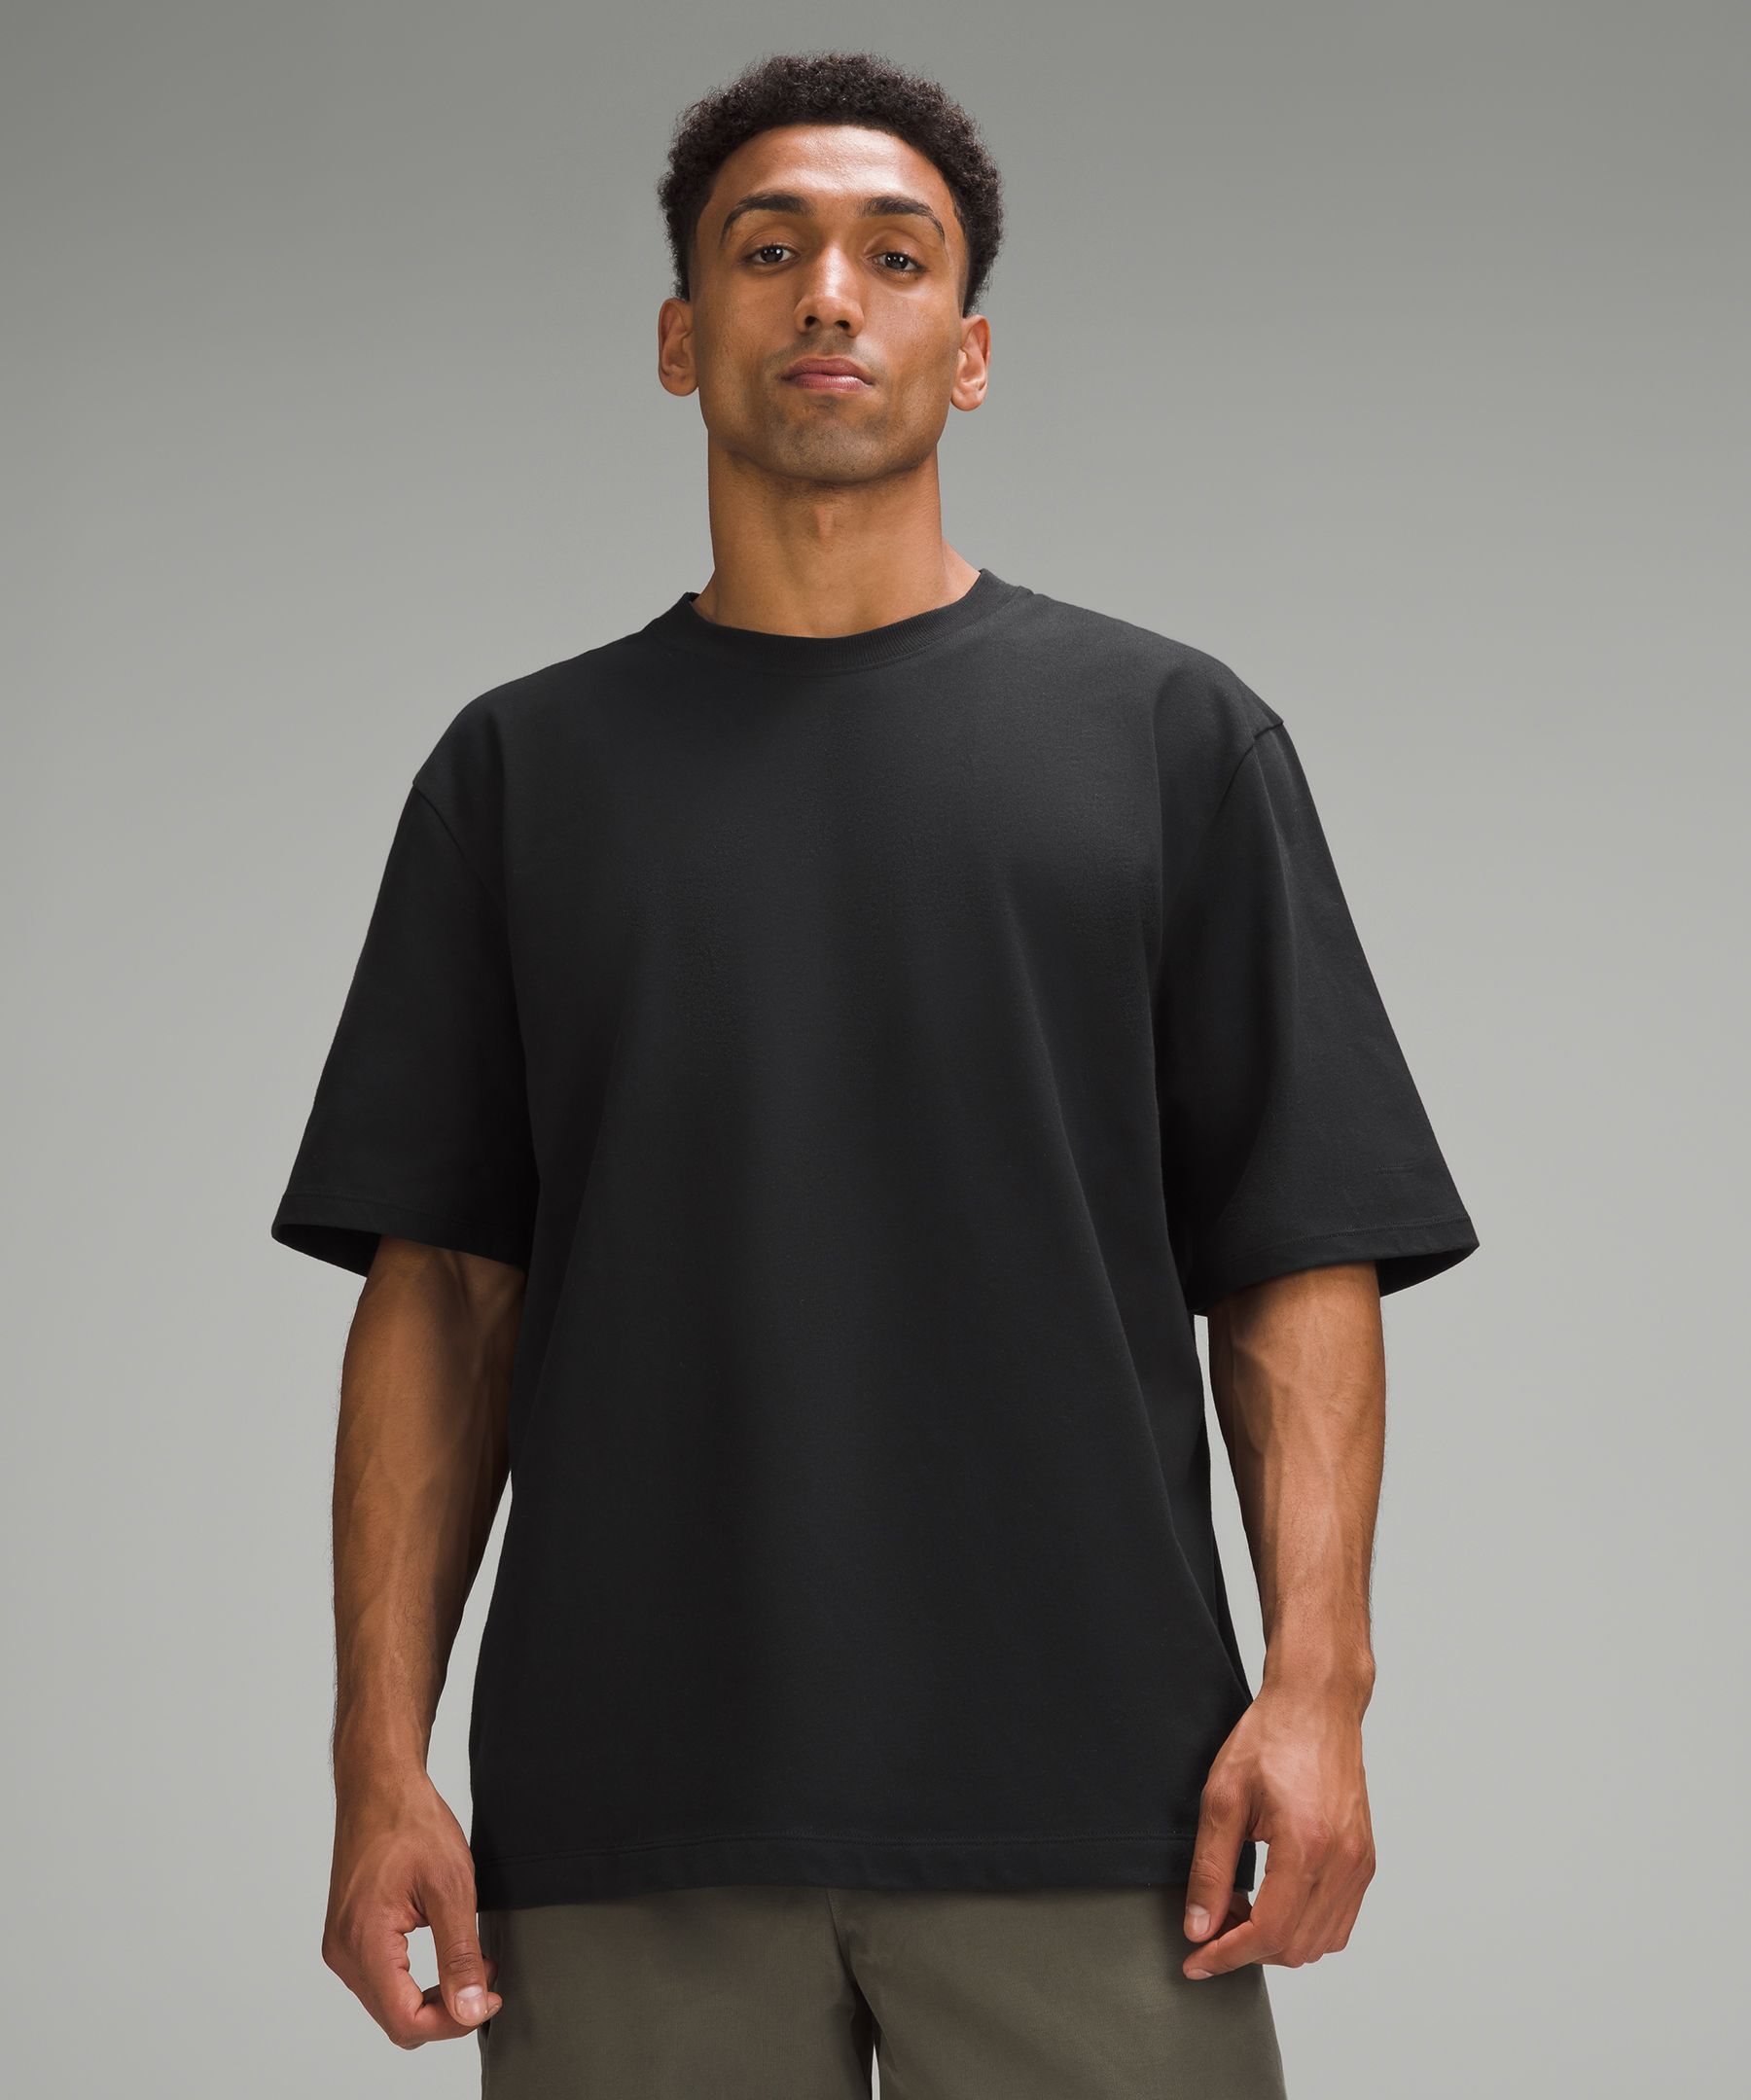 Lululemon Athletica Gray Active T-Shirt Size 10 - 43% off